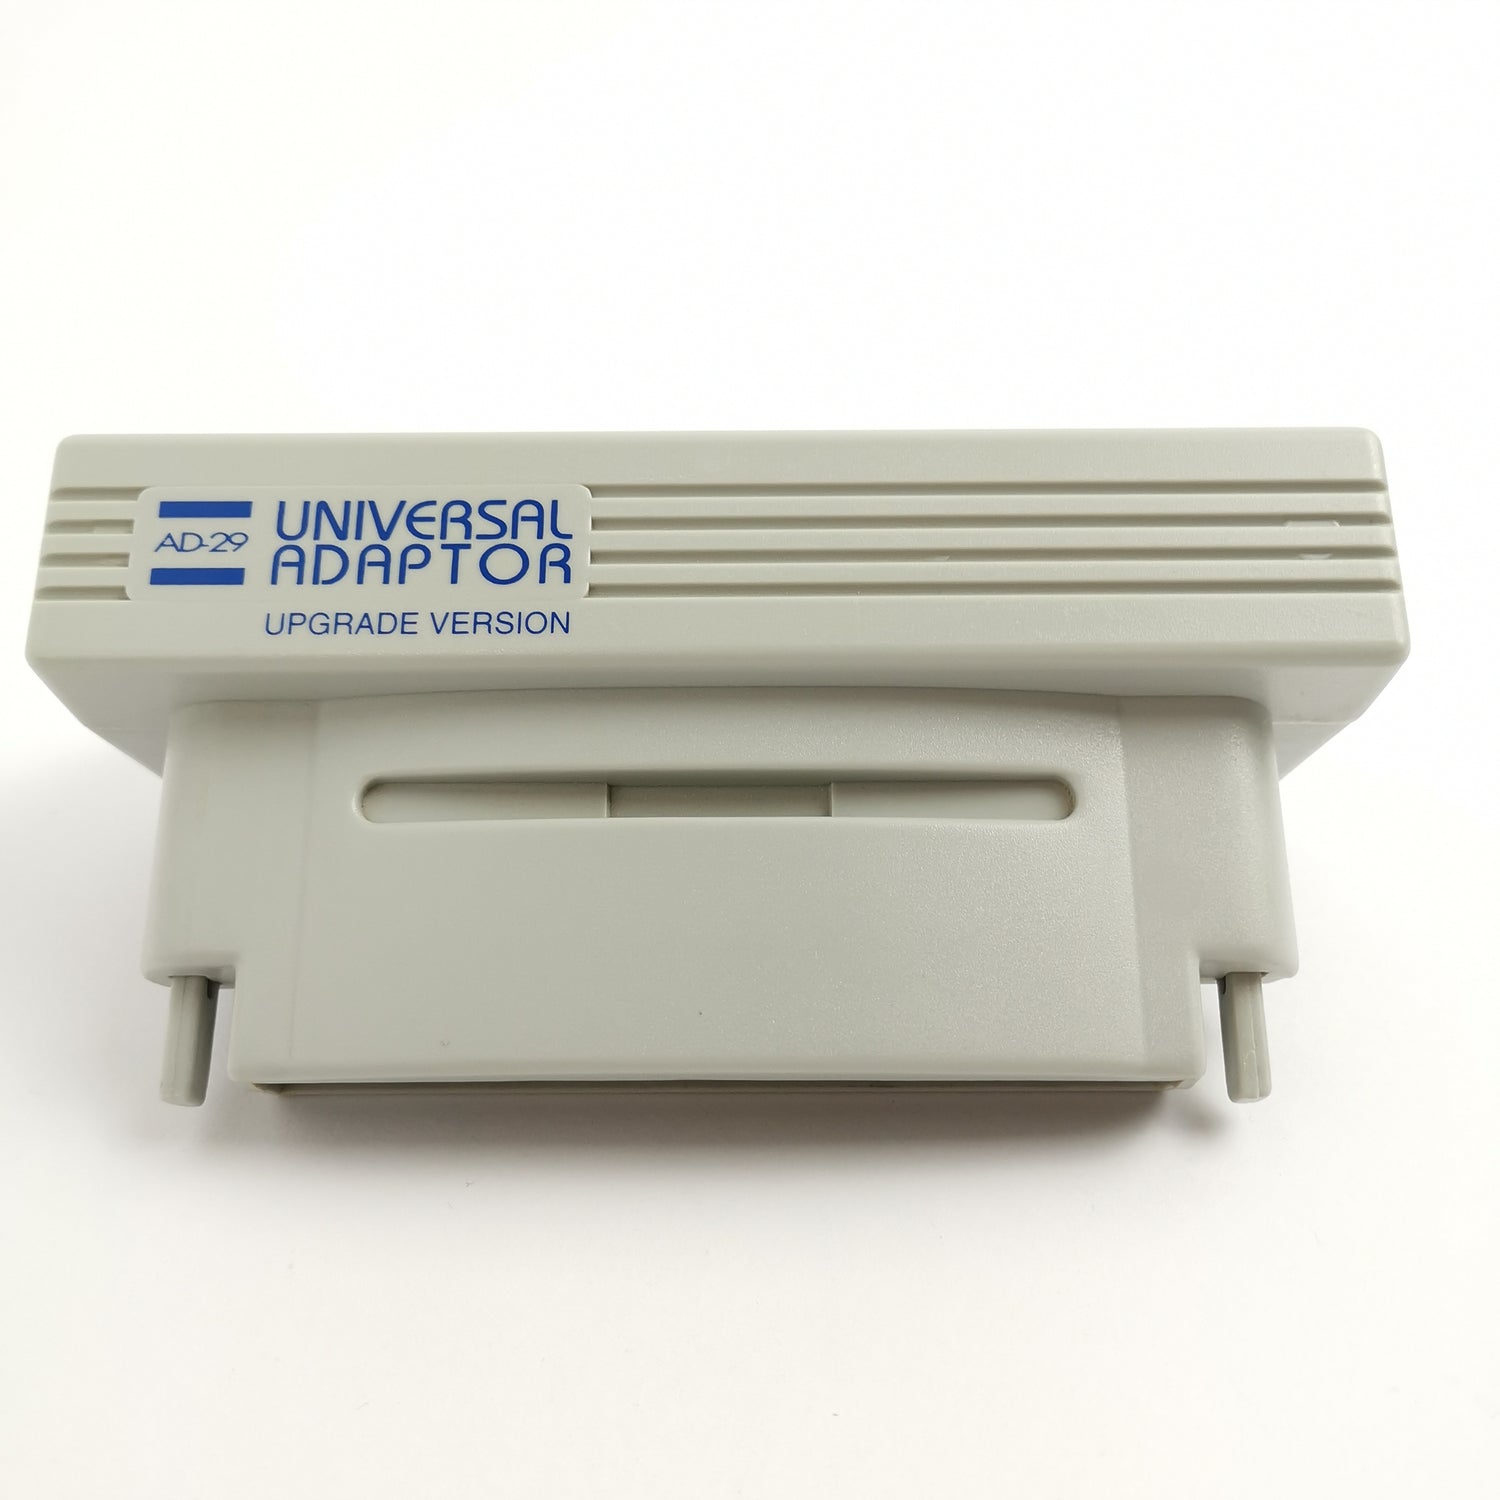 Super Nintendo AD-29 Universal Adapter Upgrade Version | SNES Converter